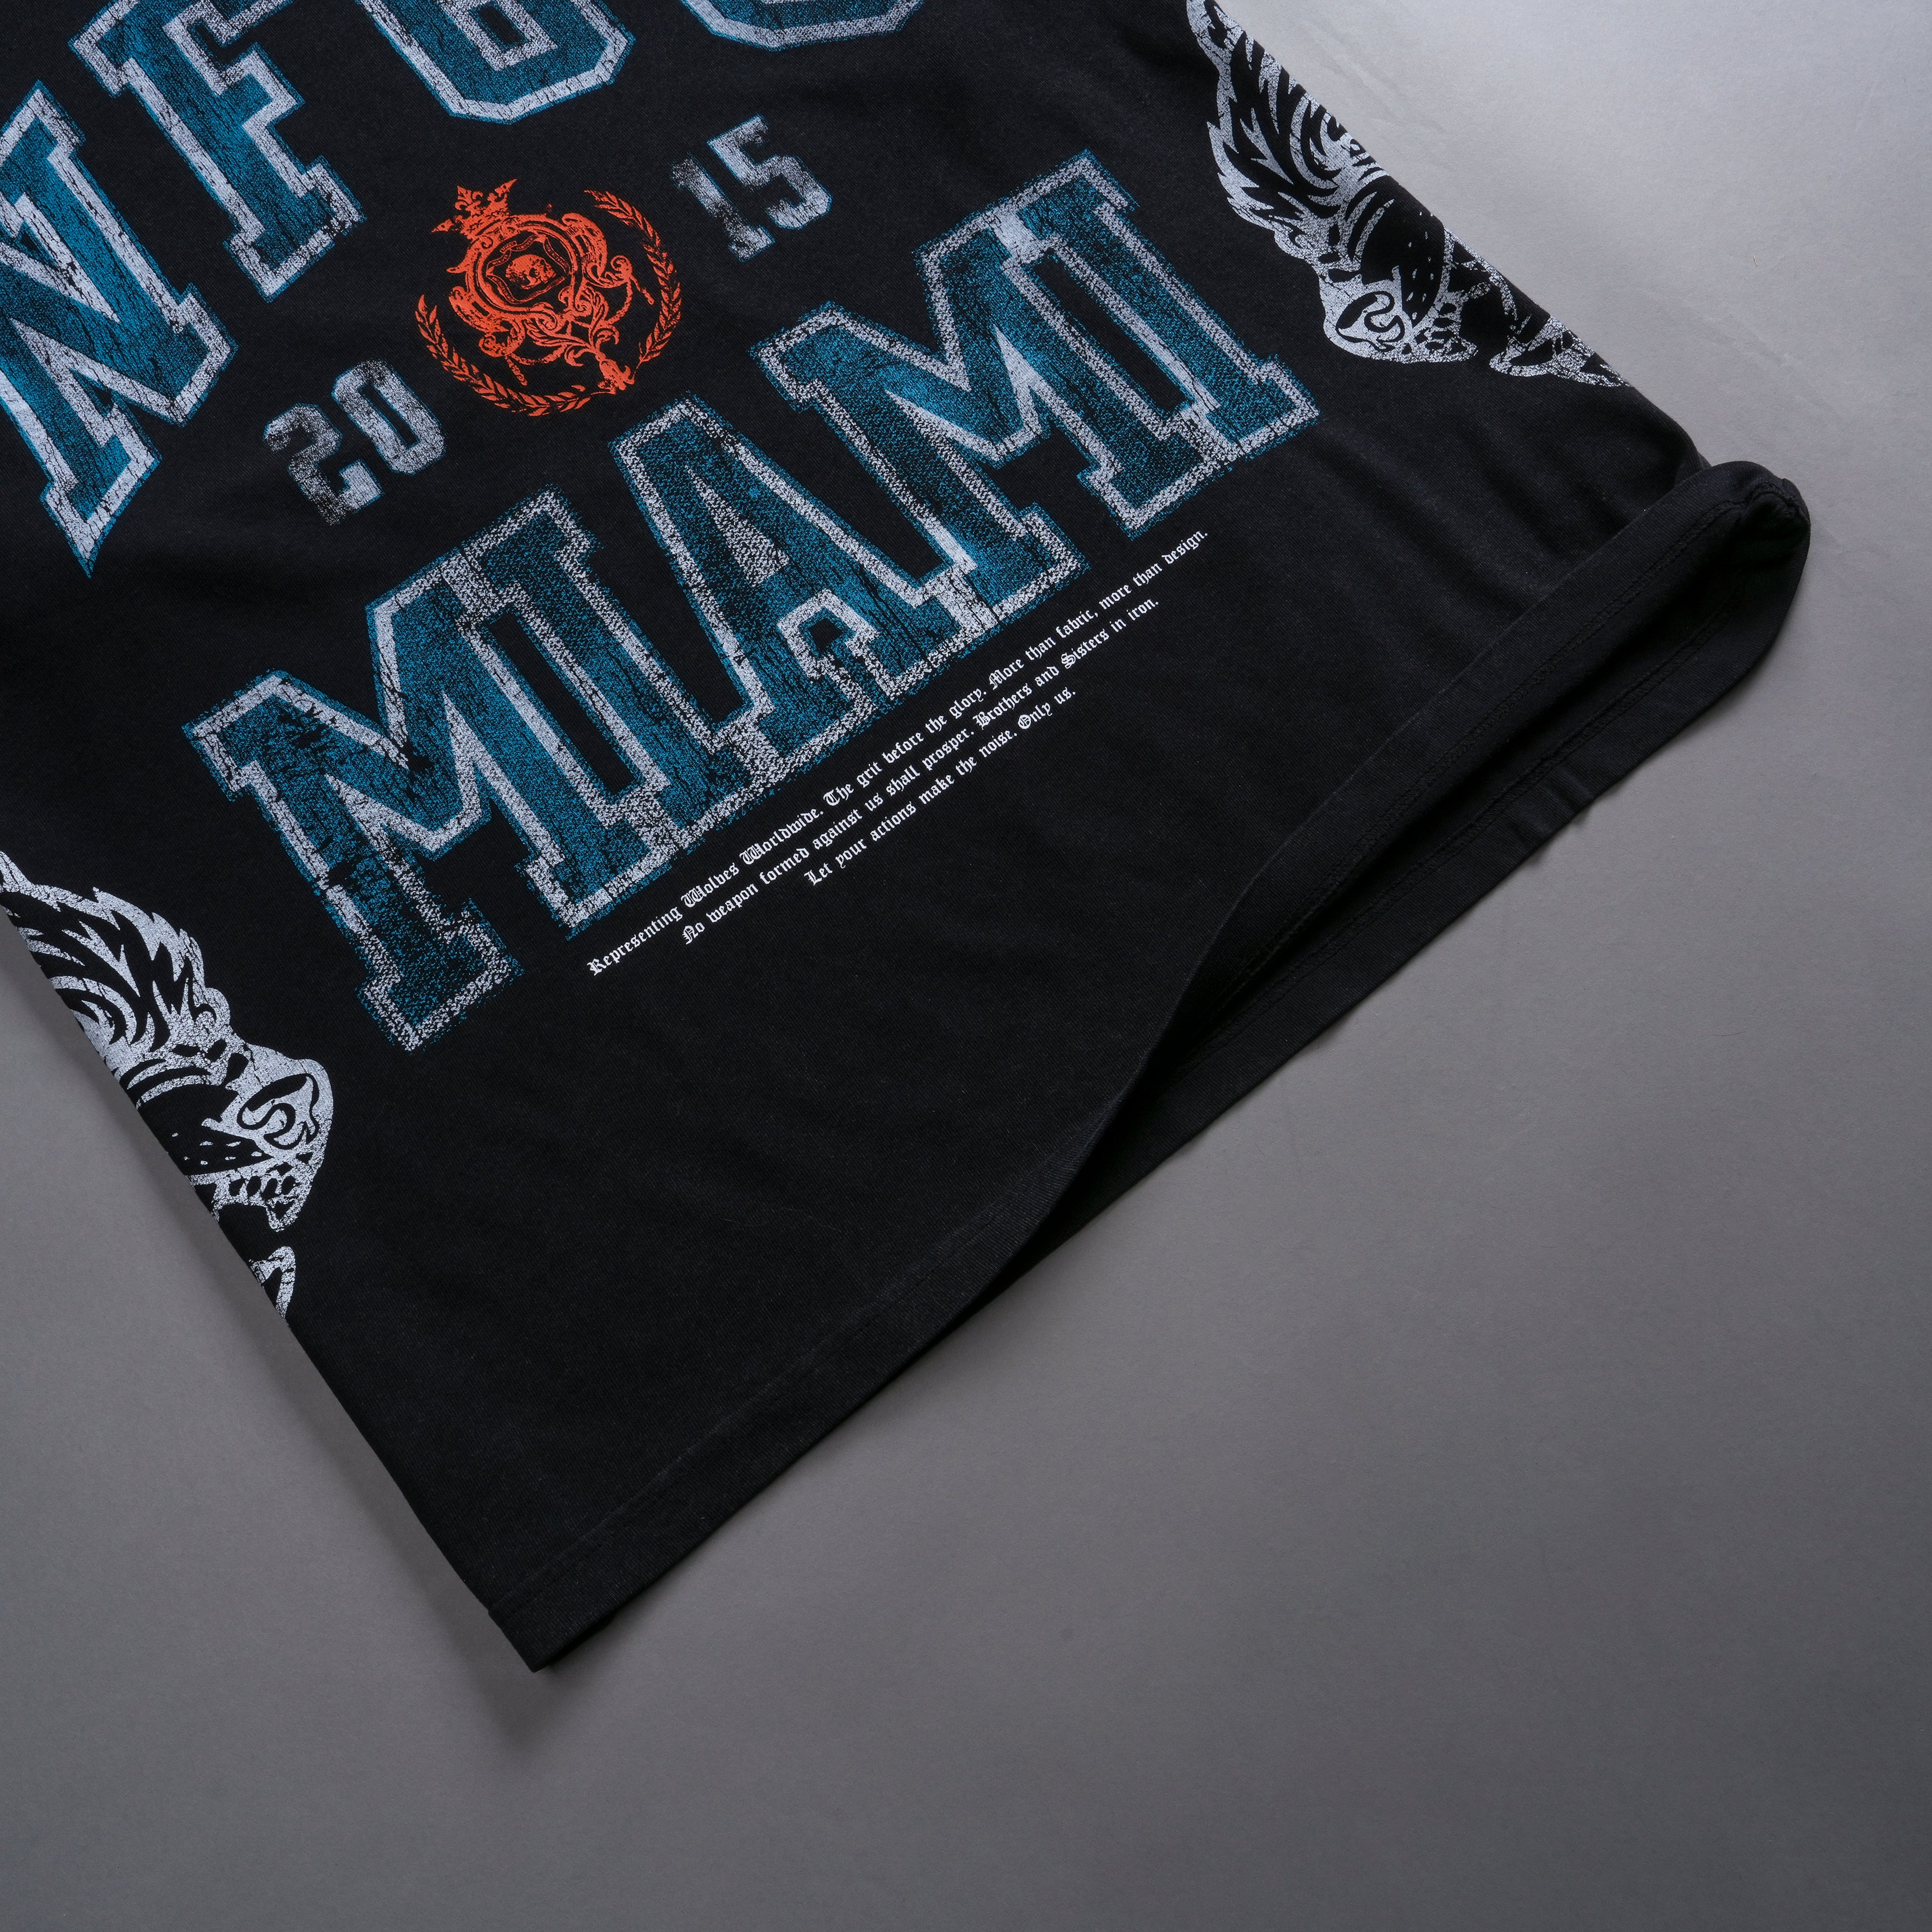 Miami Wolves "Premium Vintage" Oversized Tee in Black